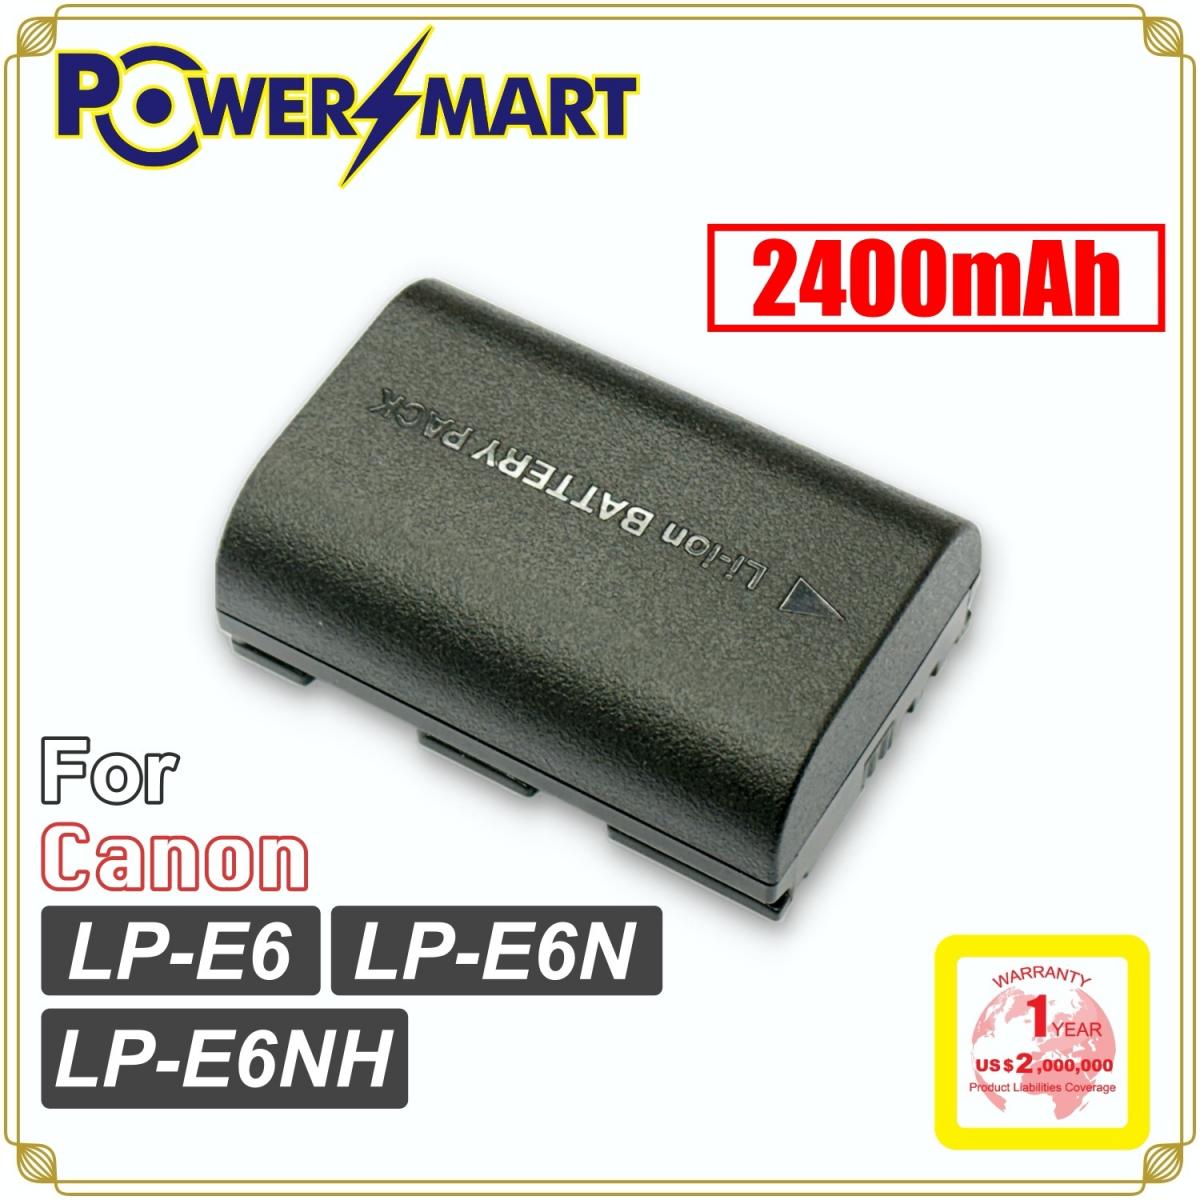 LP-E6+ Replacement Battery for Canon LP-E6/LP-E6N/LP-E6NH